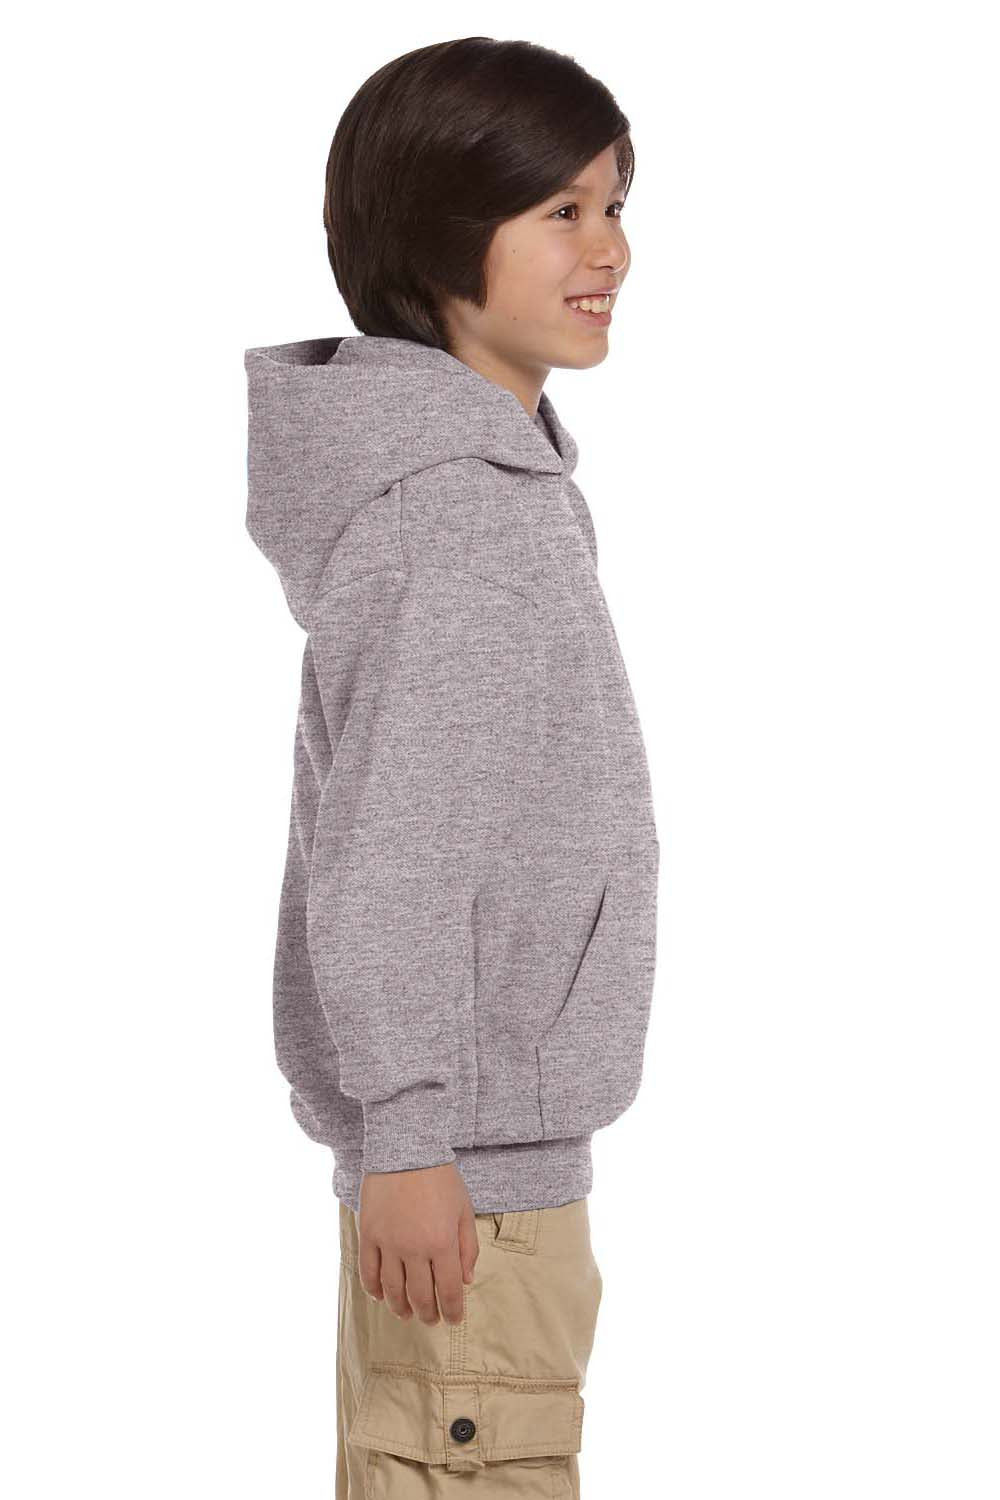 Hanes P473 Youth EcoSmart Print Pro XP Hooded Sweatshirt Hoodie Light Steel Grey Side